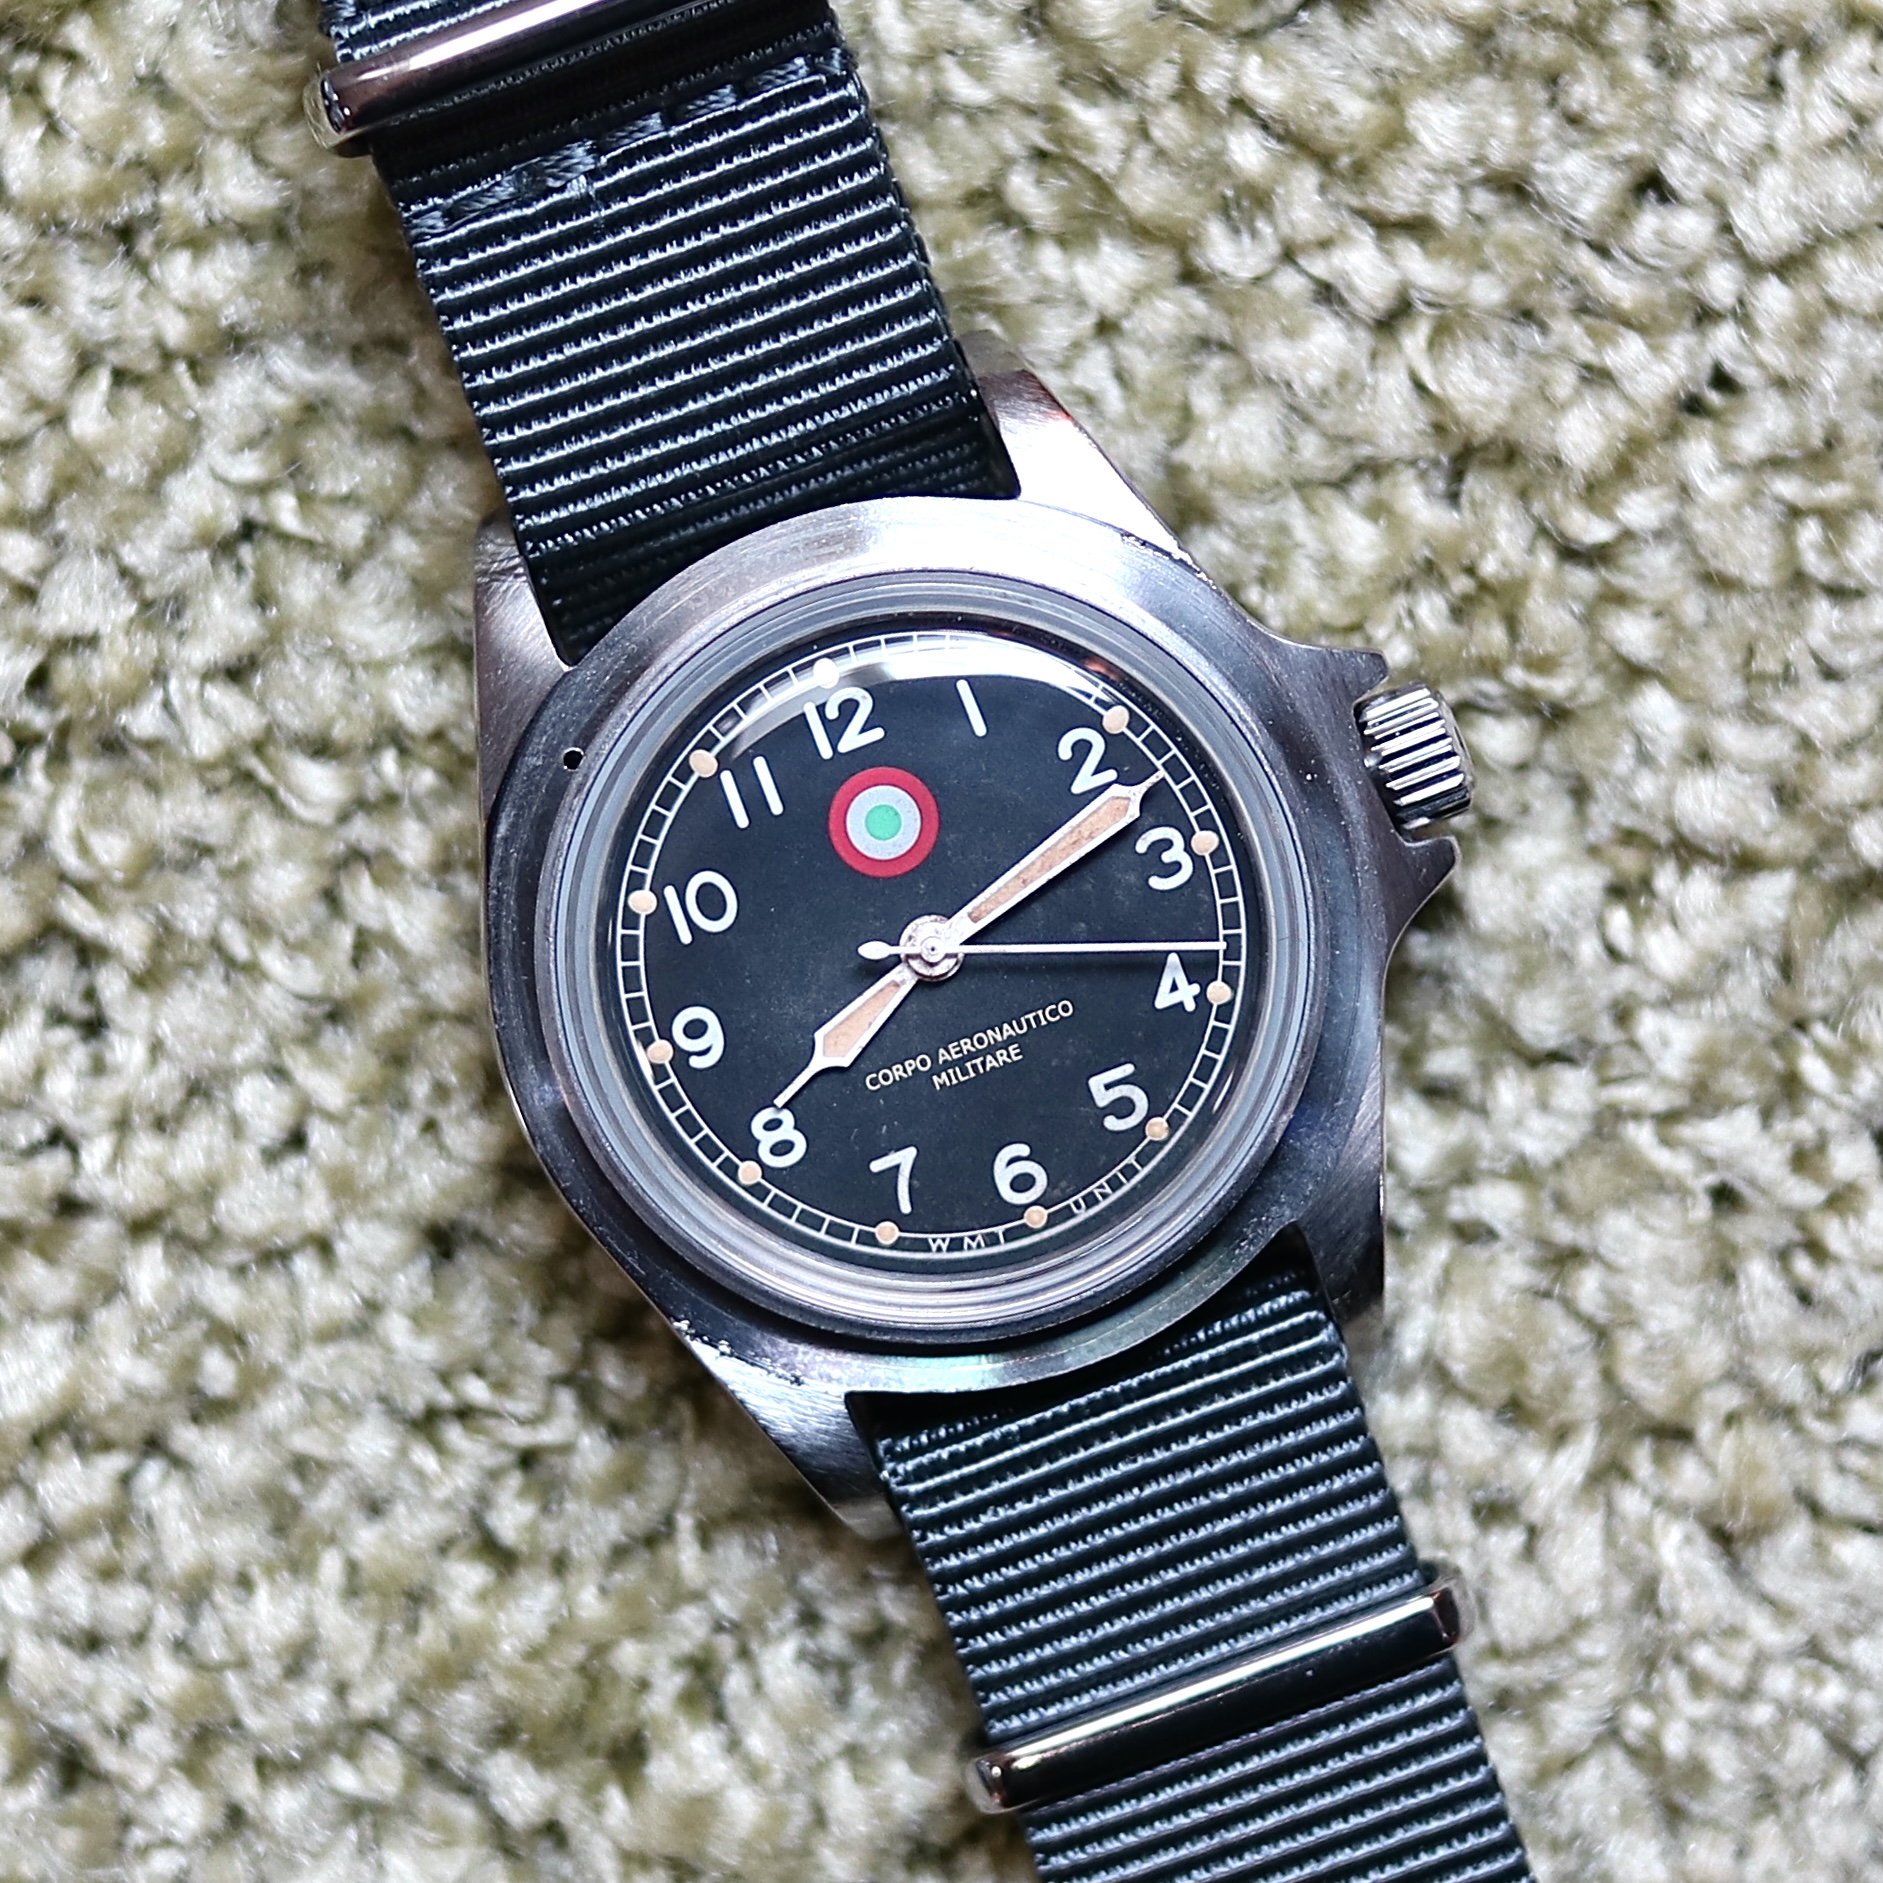 WMT WATCH】Royal Marine 1950 / Corp Aeronautico Militare / 腕時計